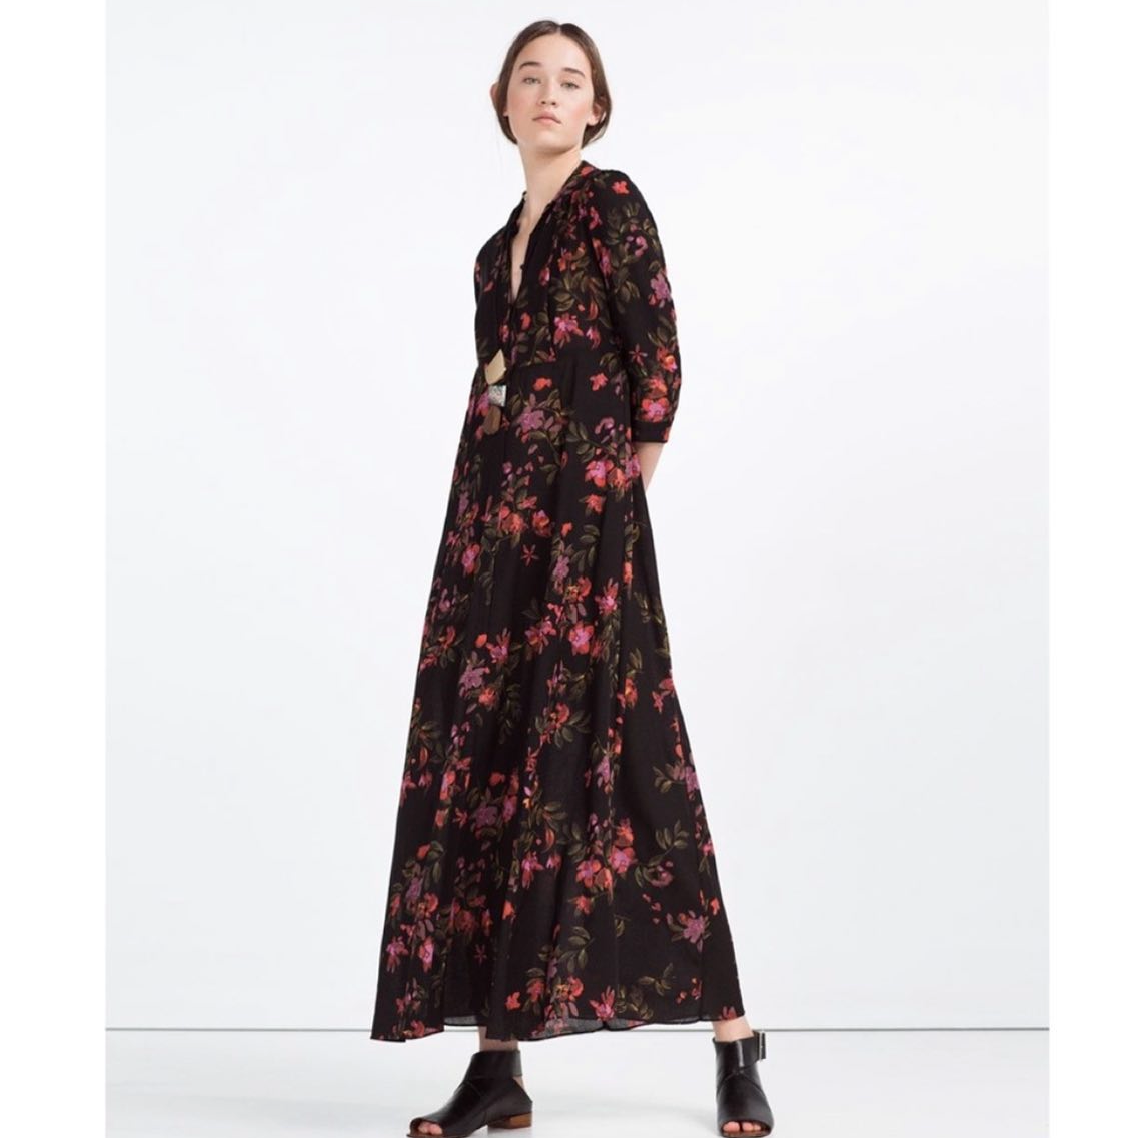 Zara Floral Print Maxi Dress